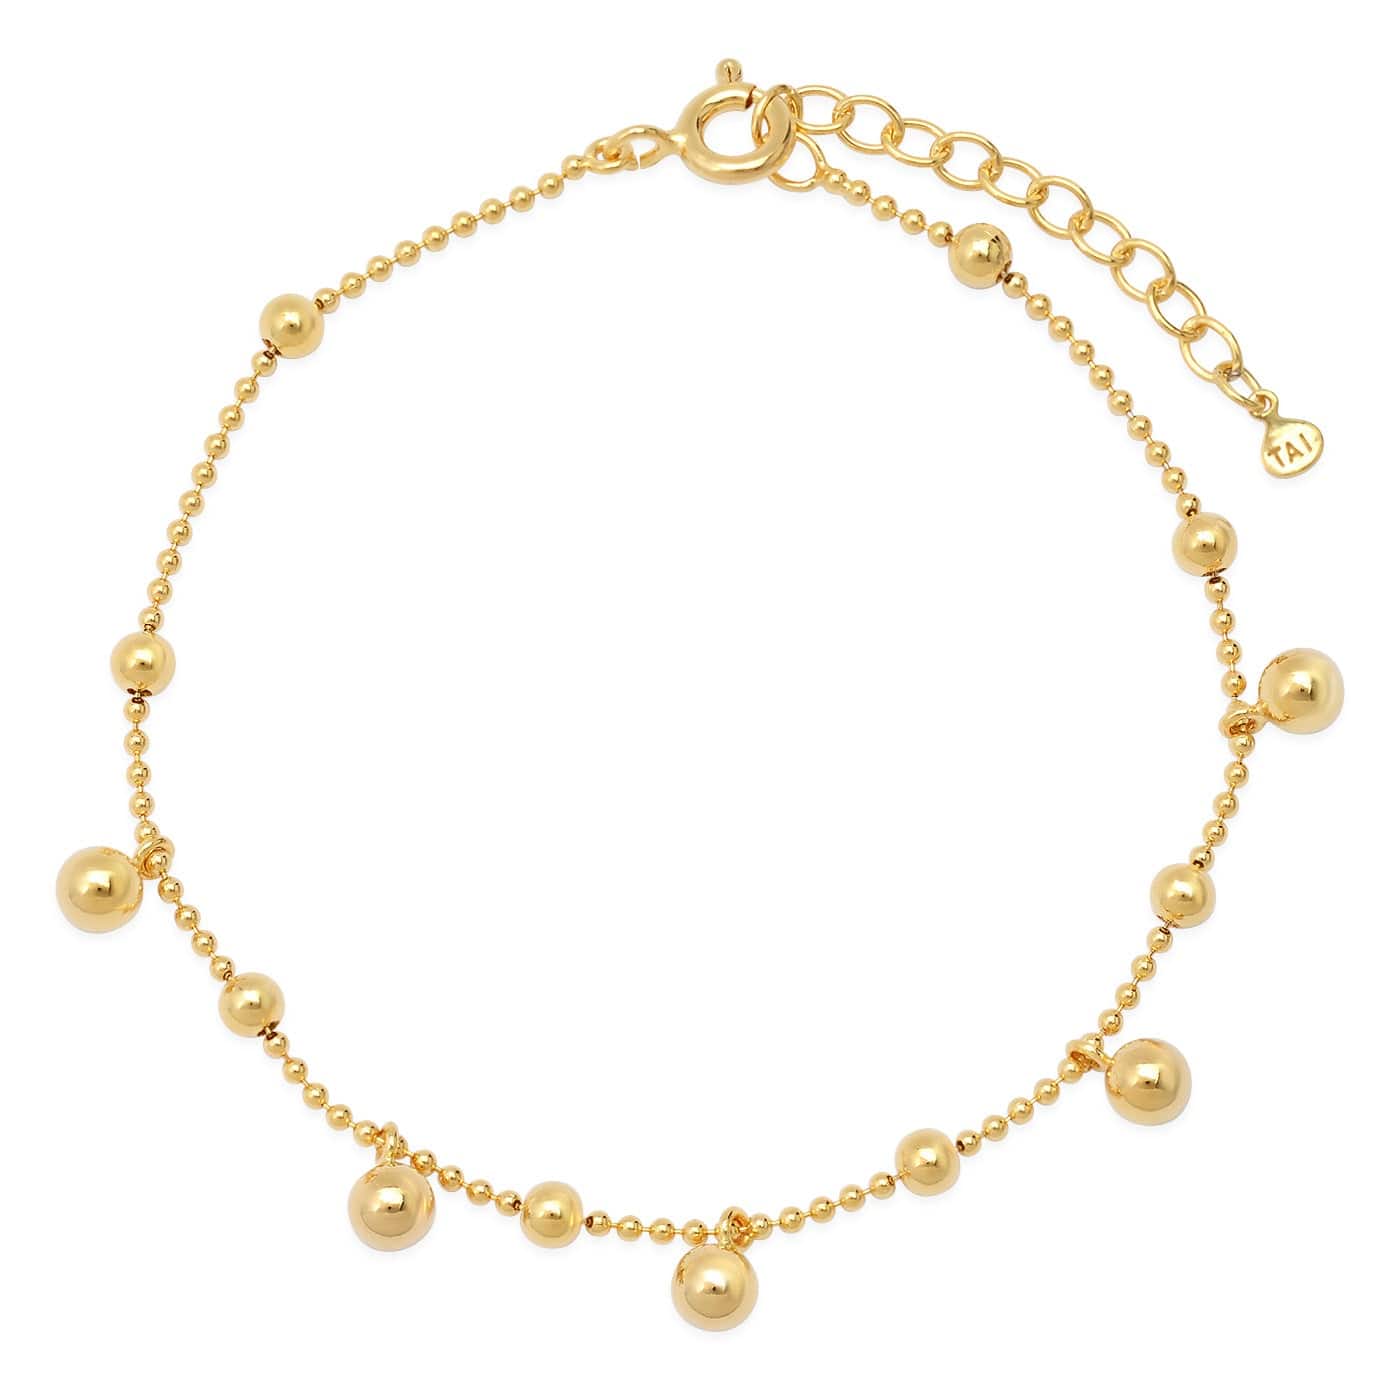 TAI JEWELRY Bracelet Ball Chain Bracelet with Gold Ball Charms